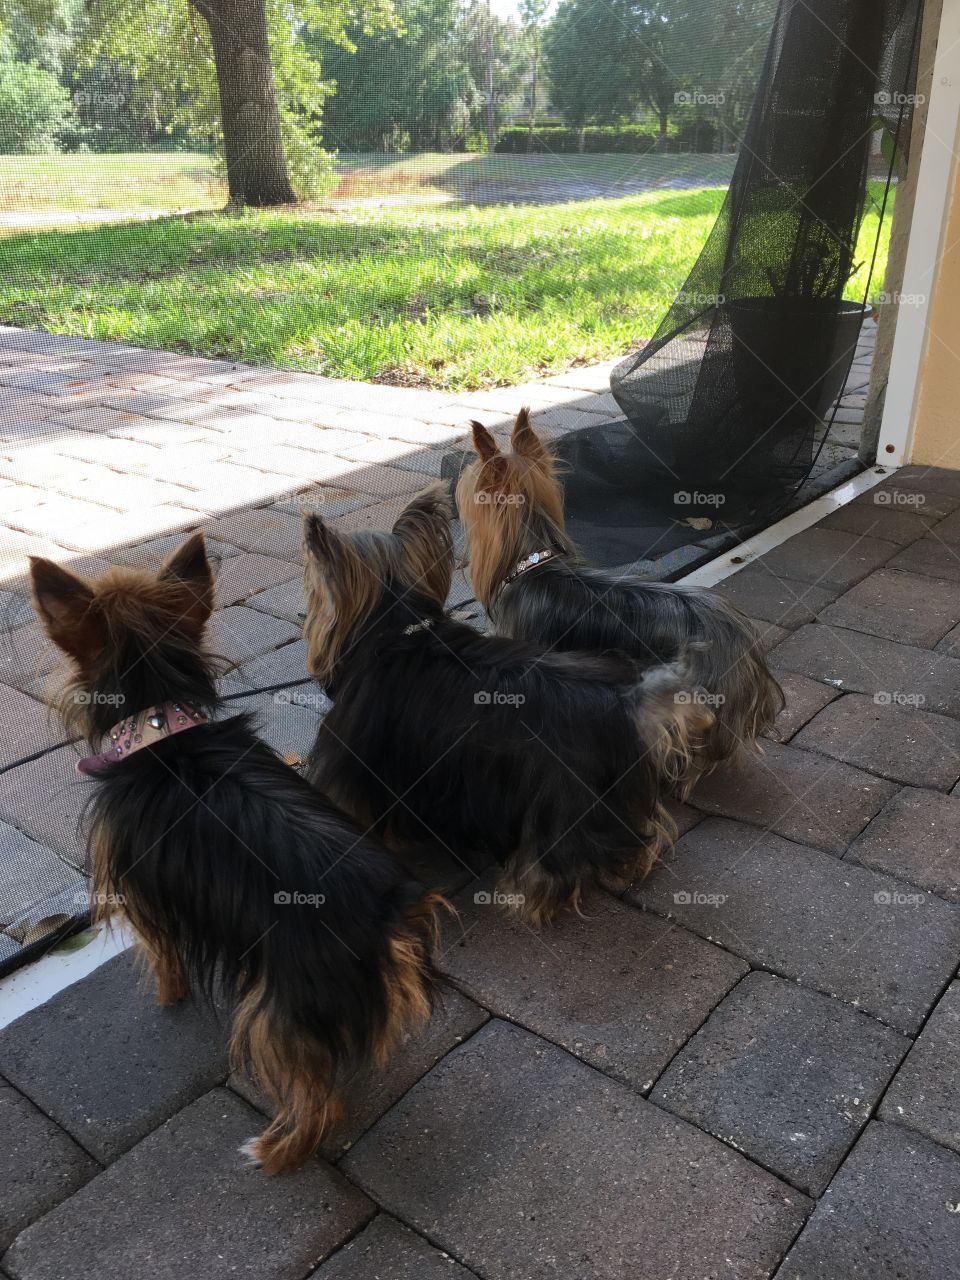 Three dogs 